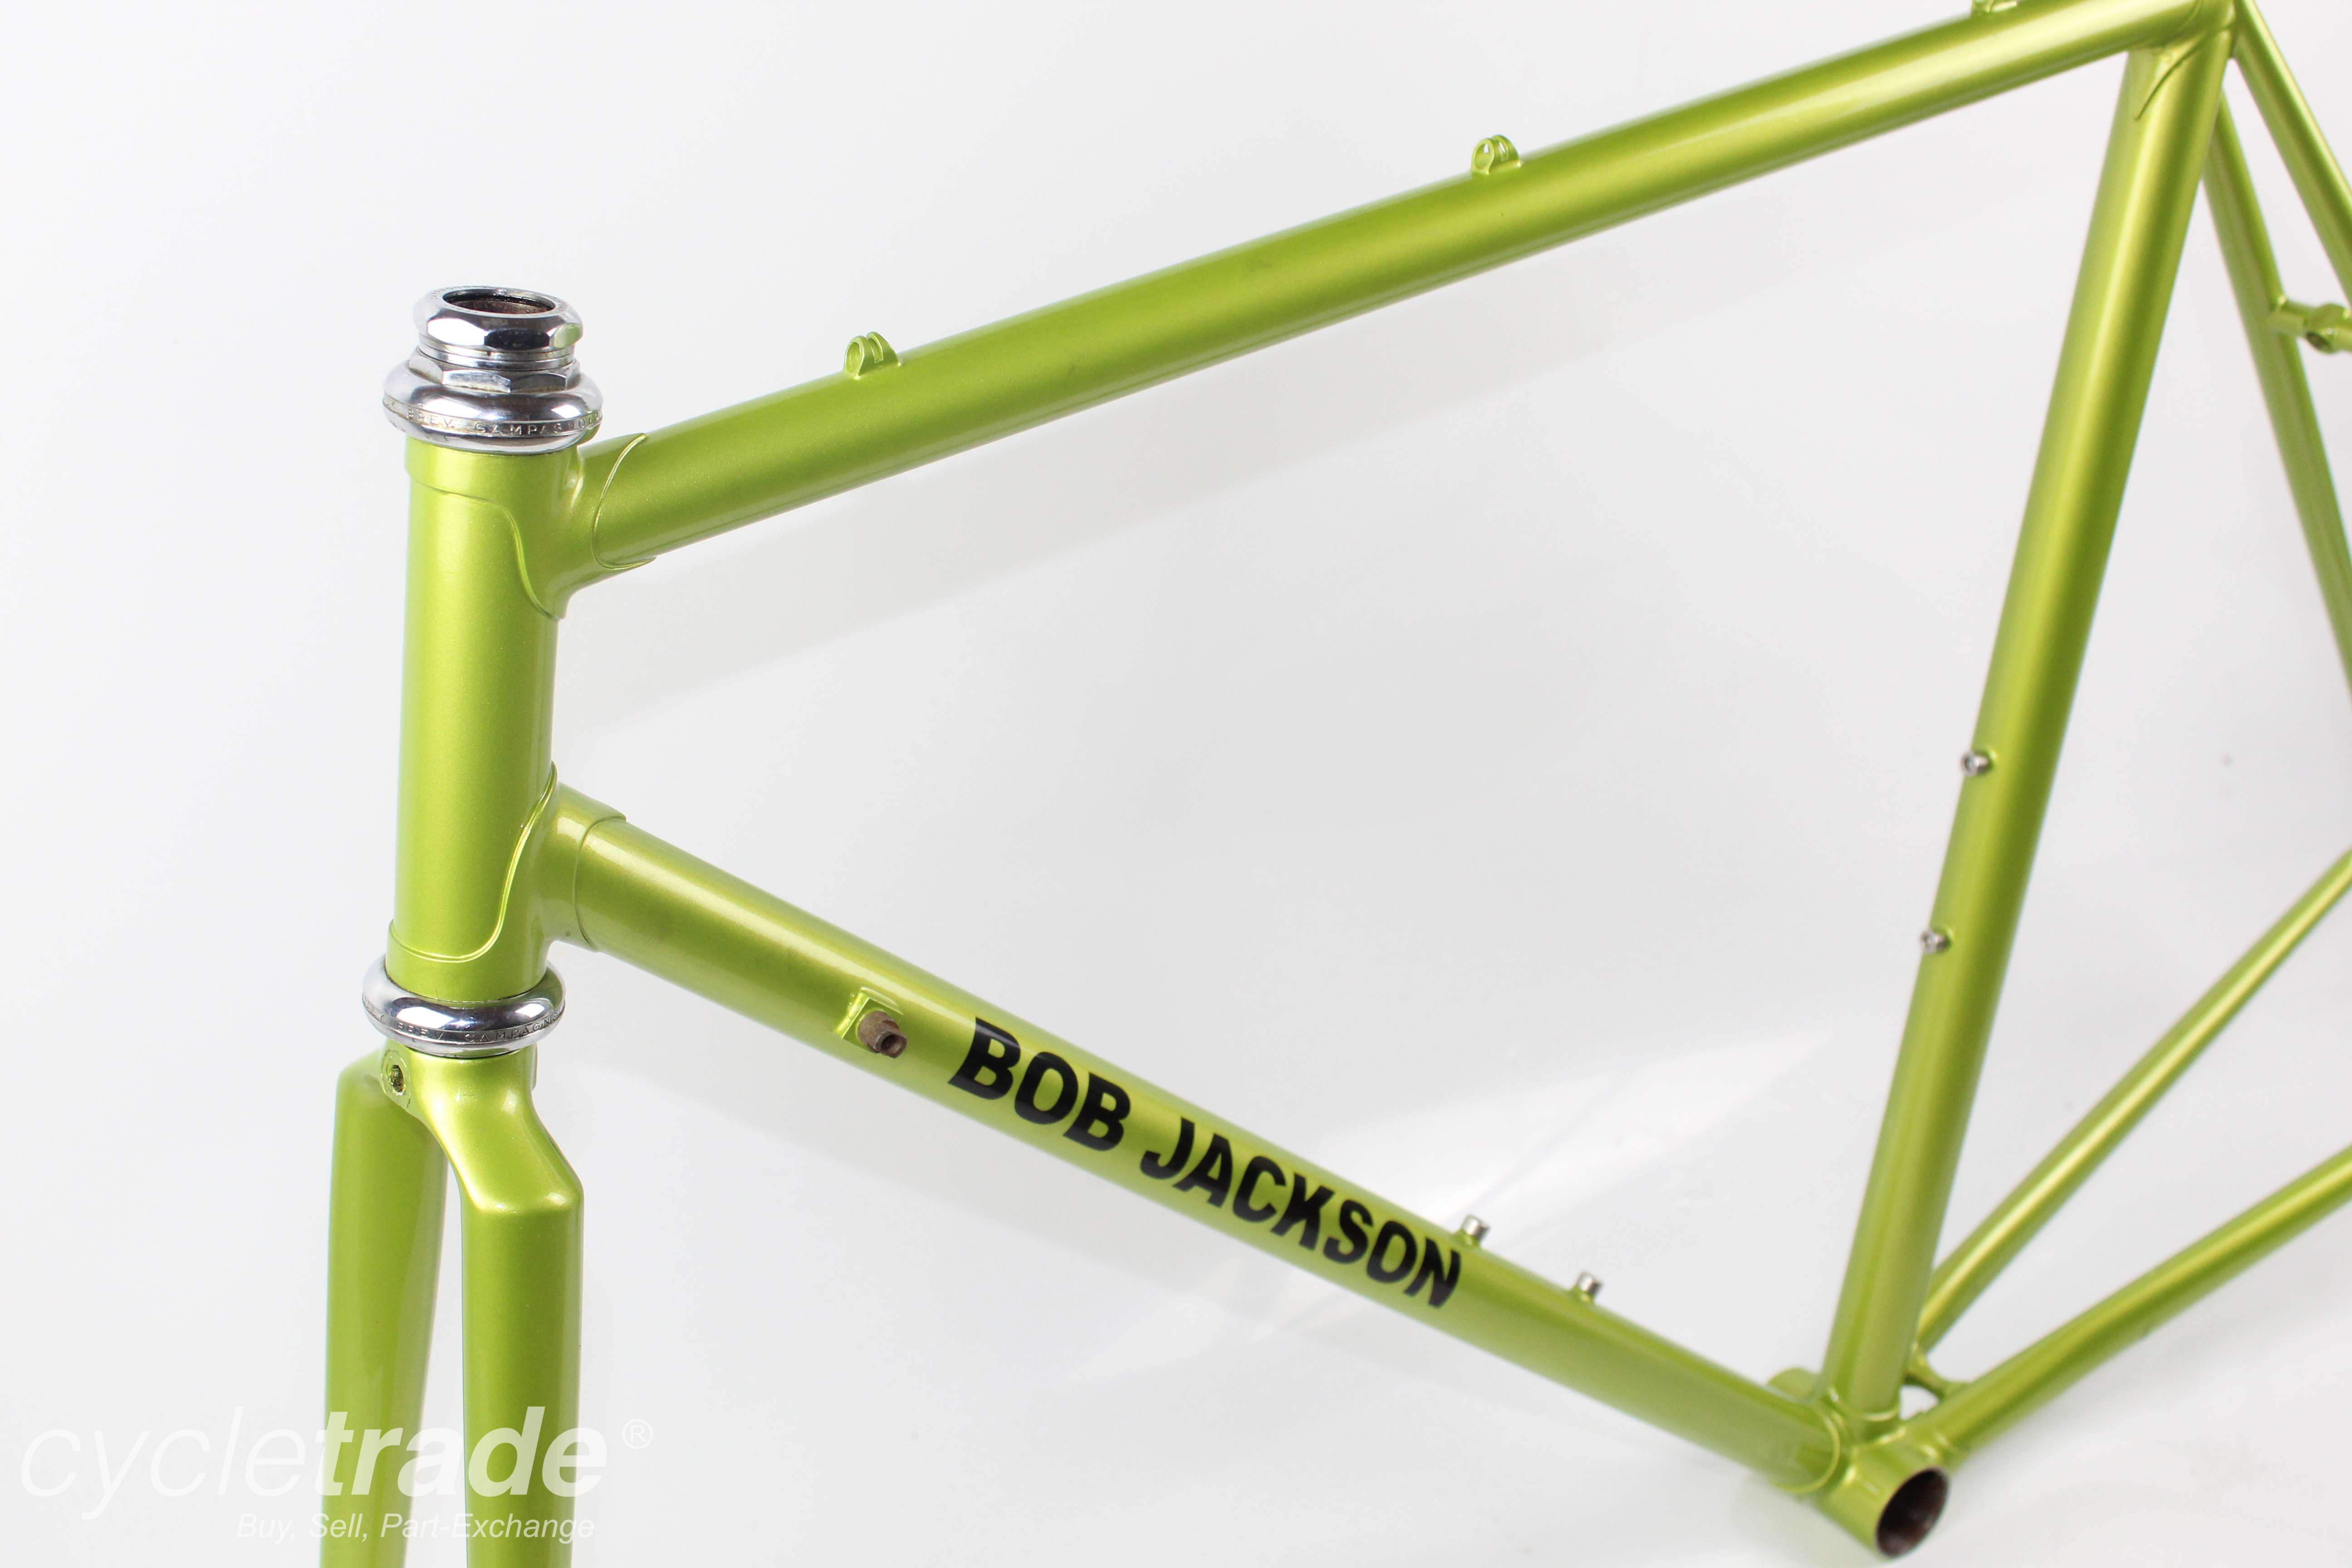 Road Frameset - Steel Bob Jackson Messina No.21059 Campagnolo 54cm - Grade A-